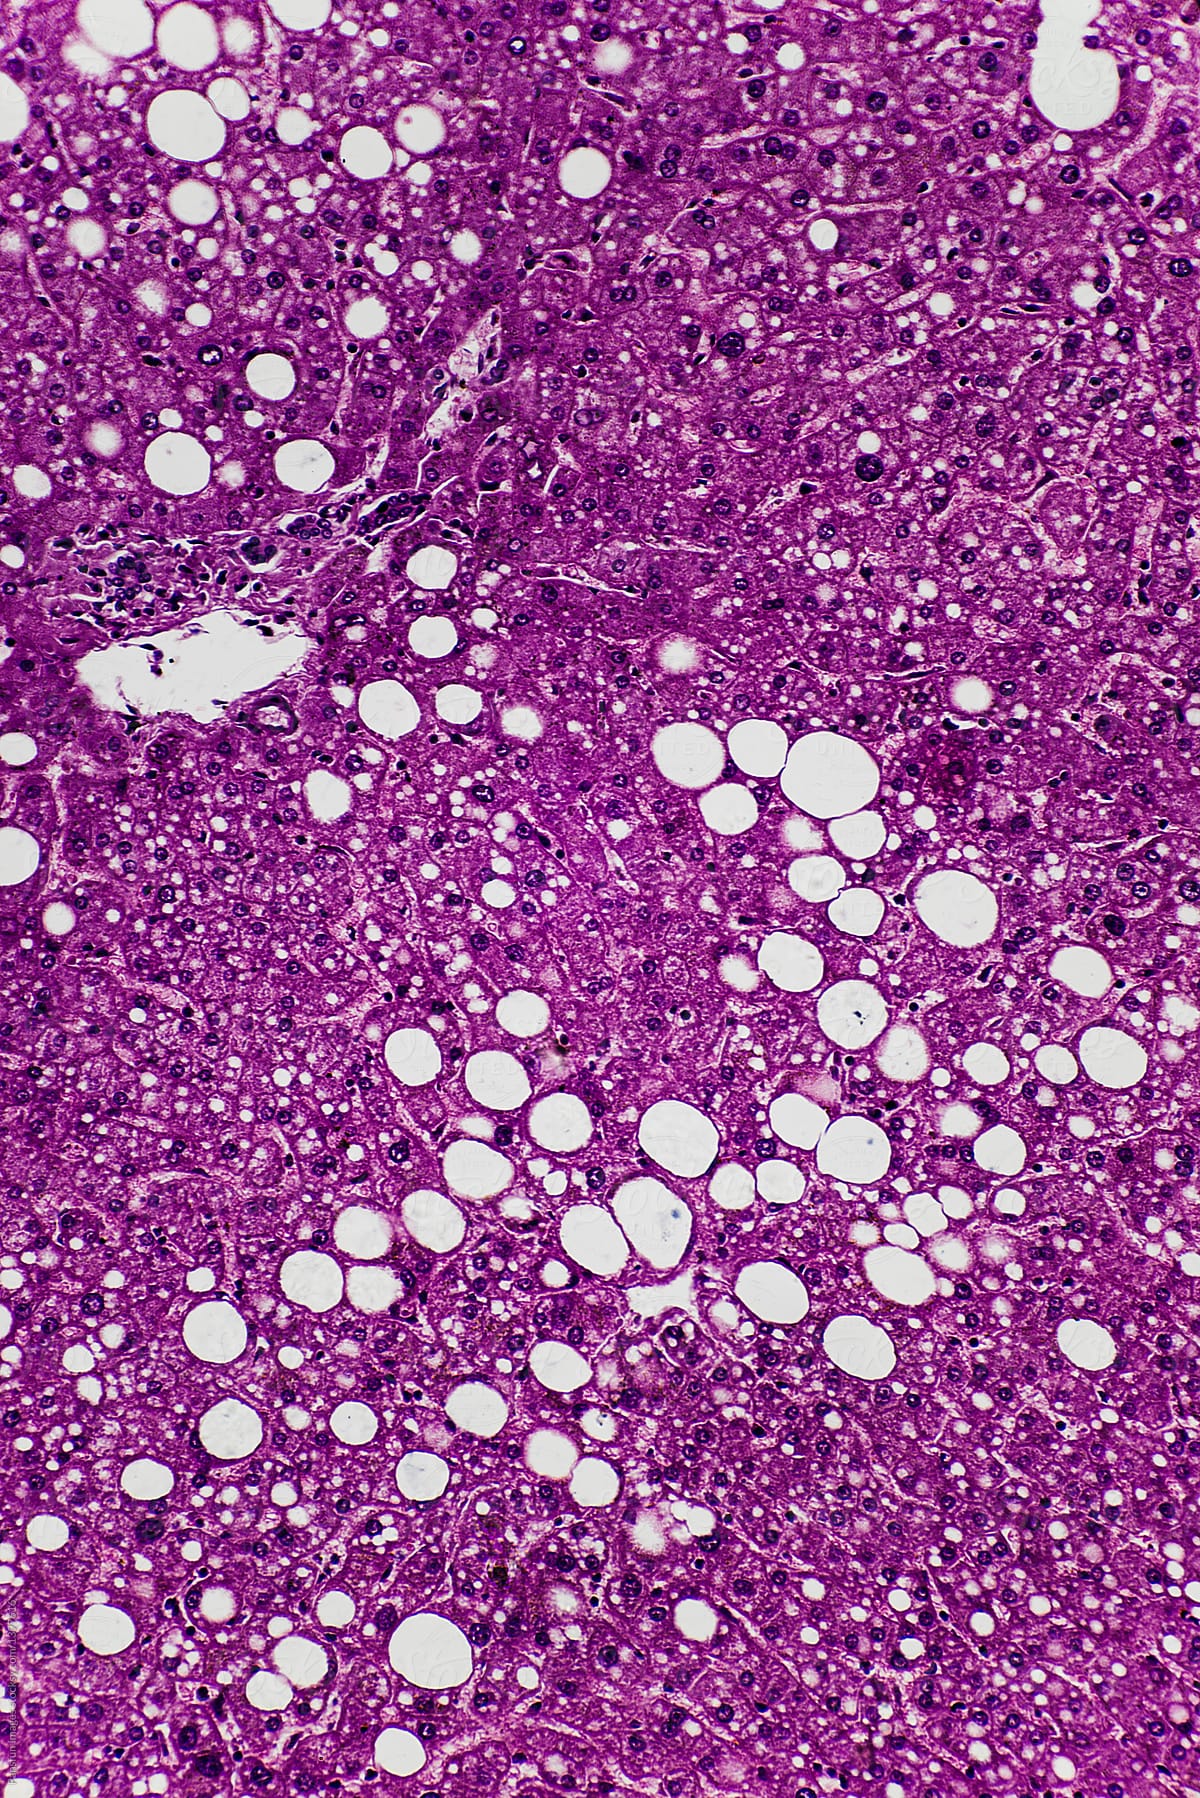 human liver tissue showing fatty degeneration